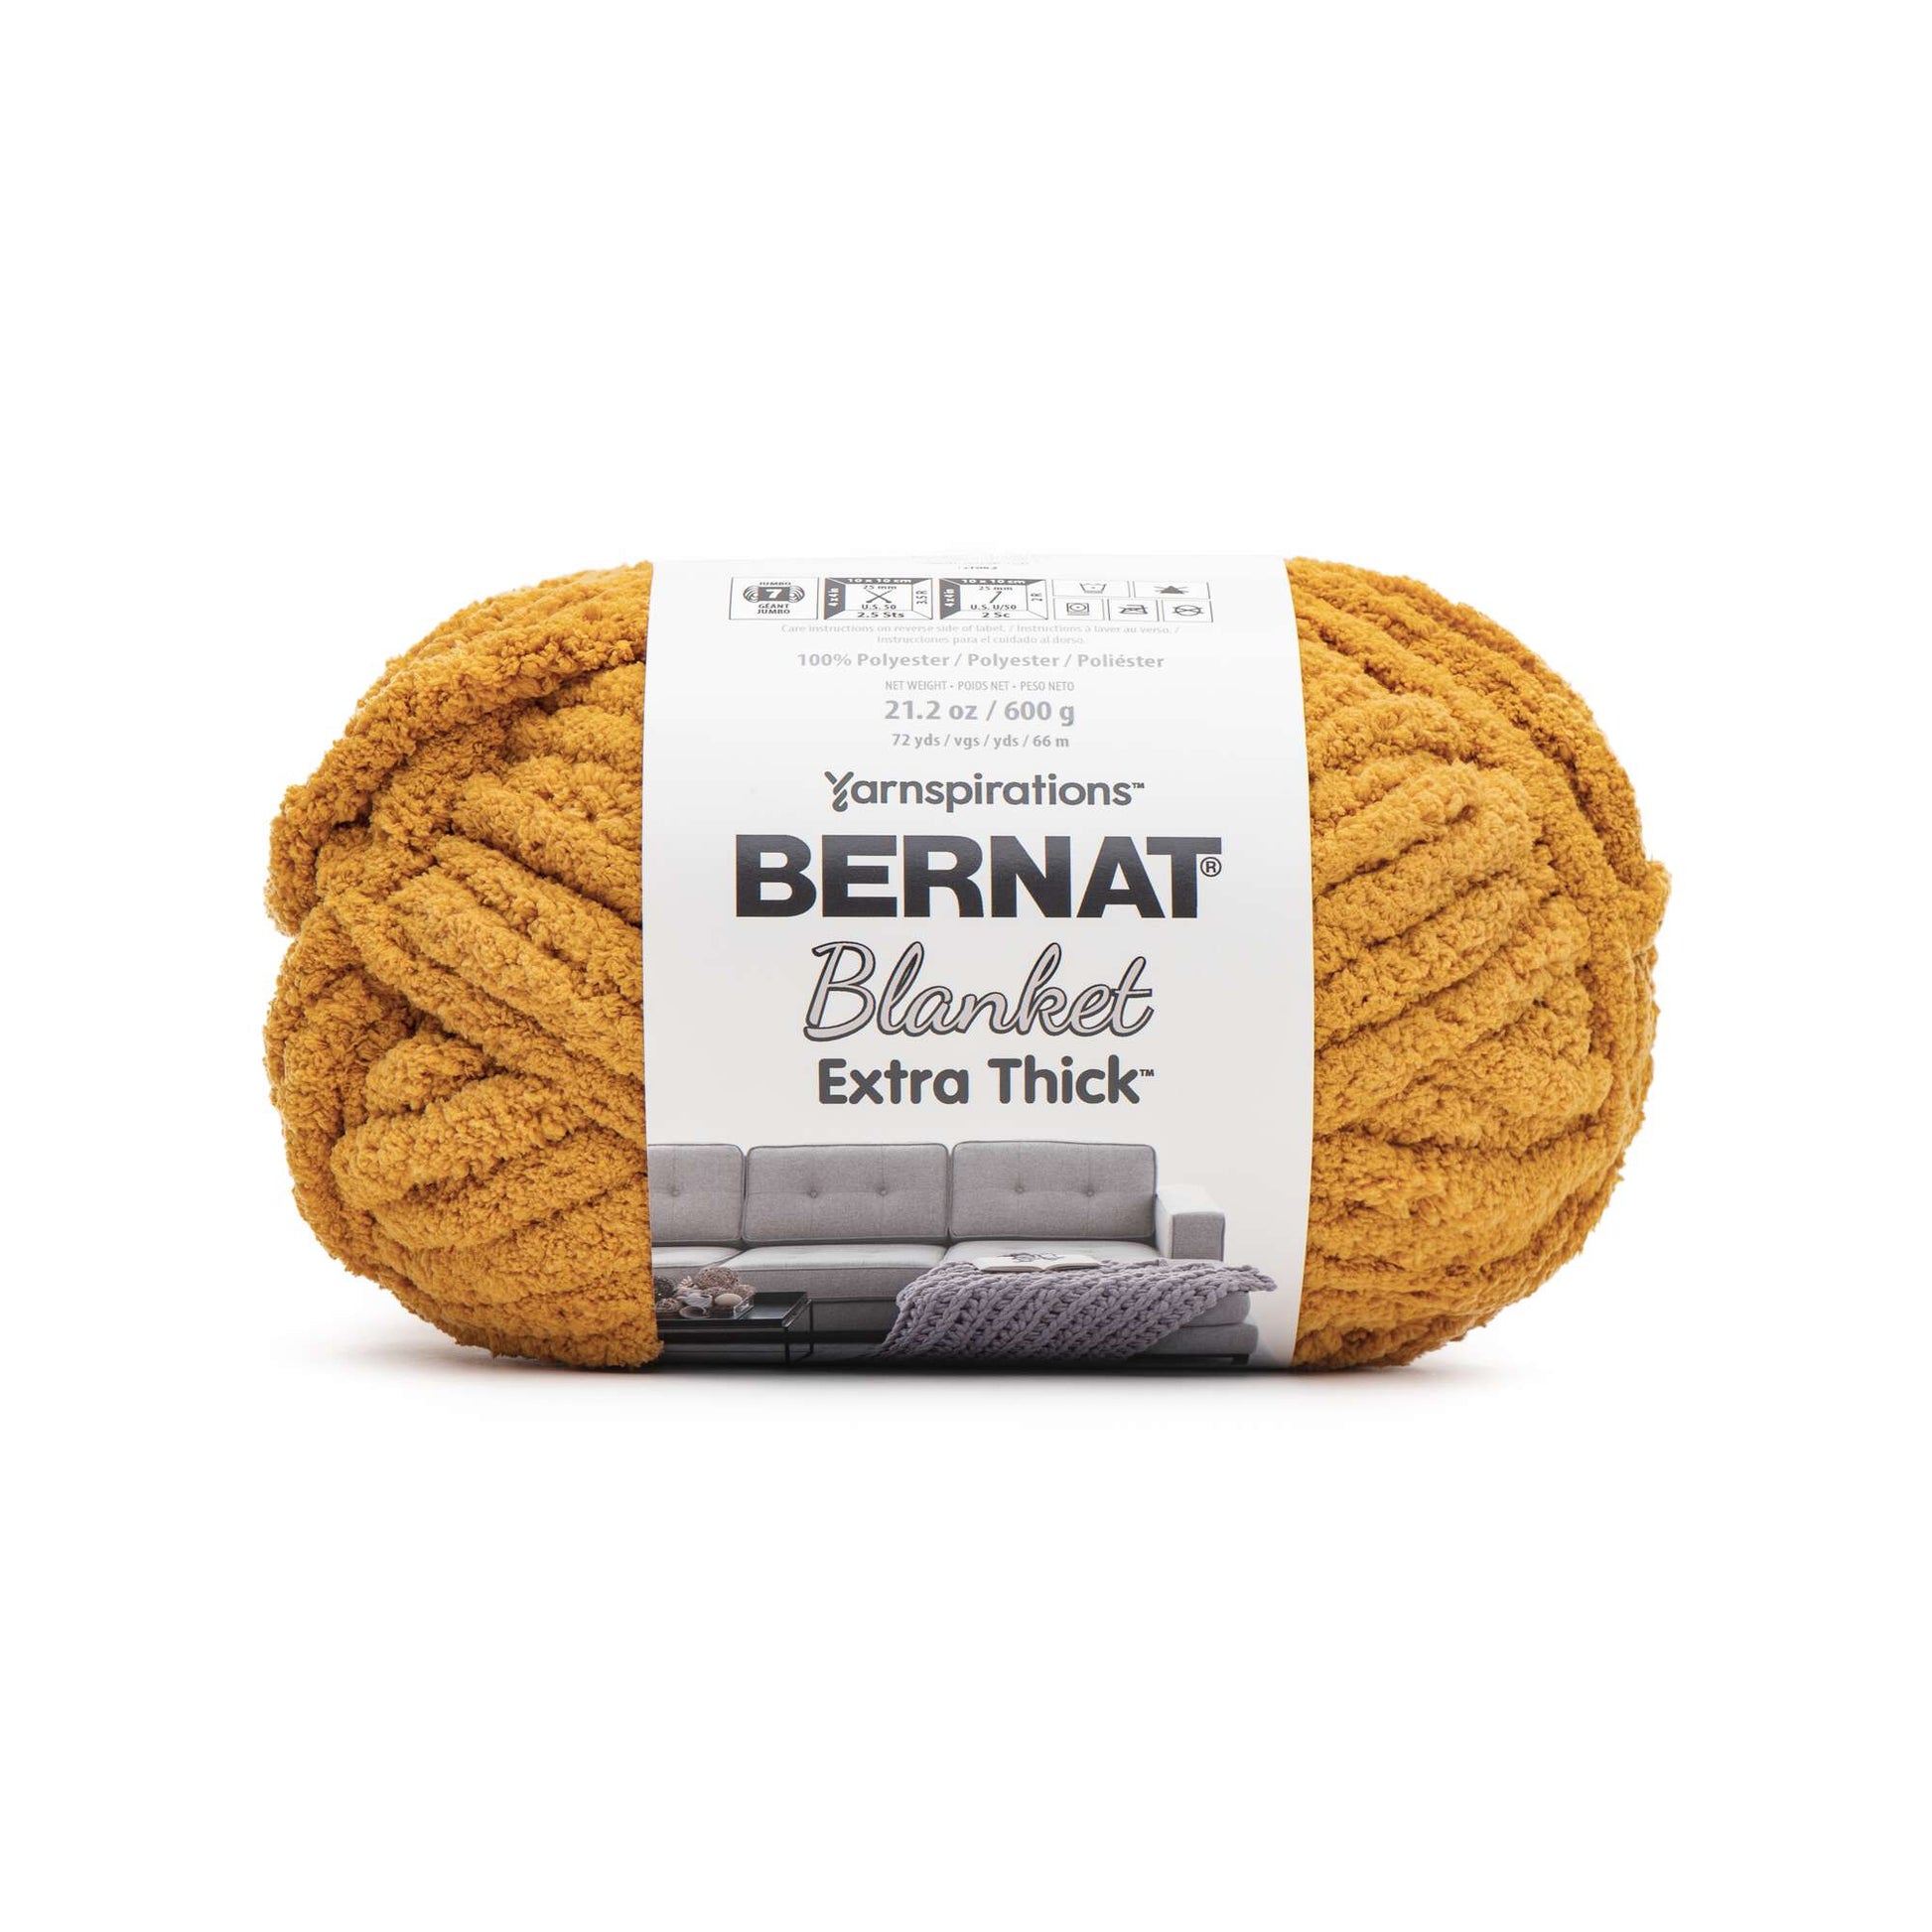 Bernat Blanket Extra Thick Yarn (600g/21.2oz) - Discontinued Shades Gold